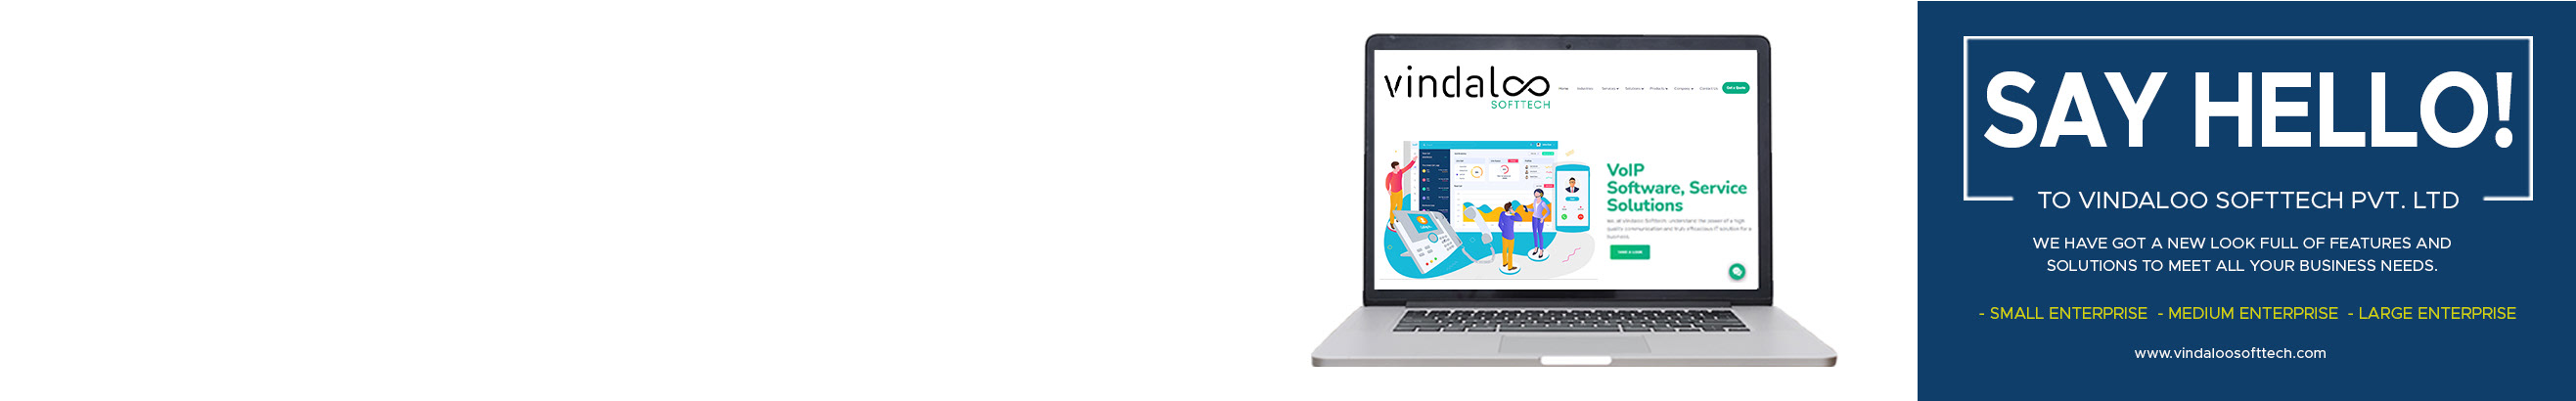 Vindaloo Softtech Pvt Ltd's profile banner